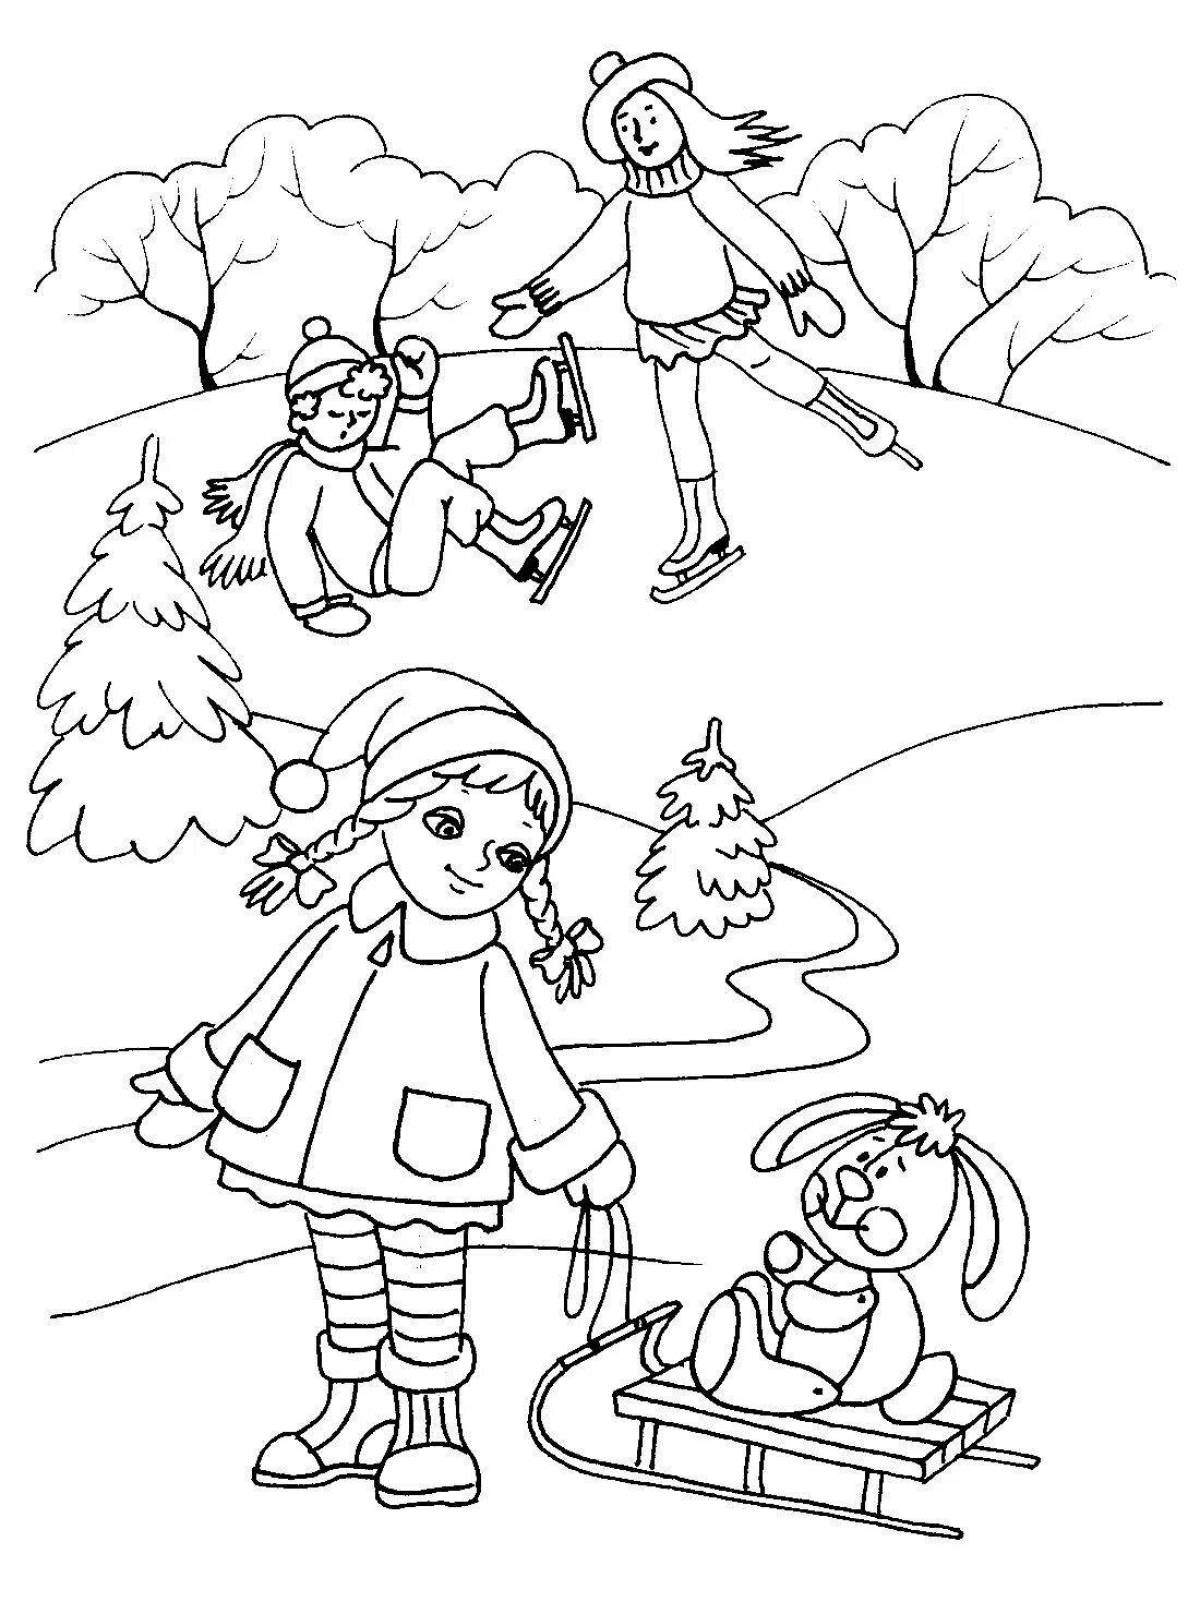 Fantastic winter coloring book for kids